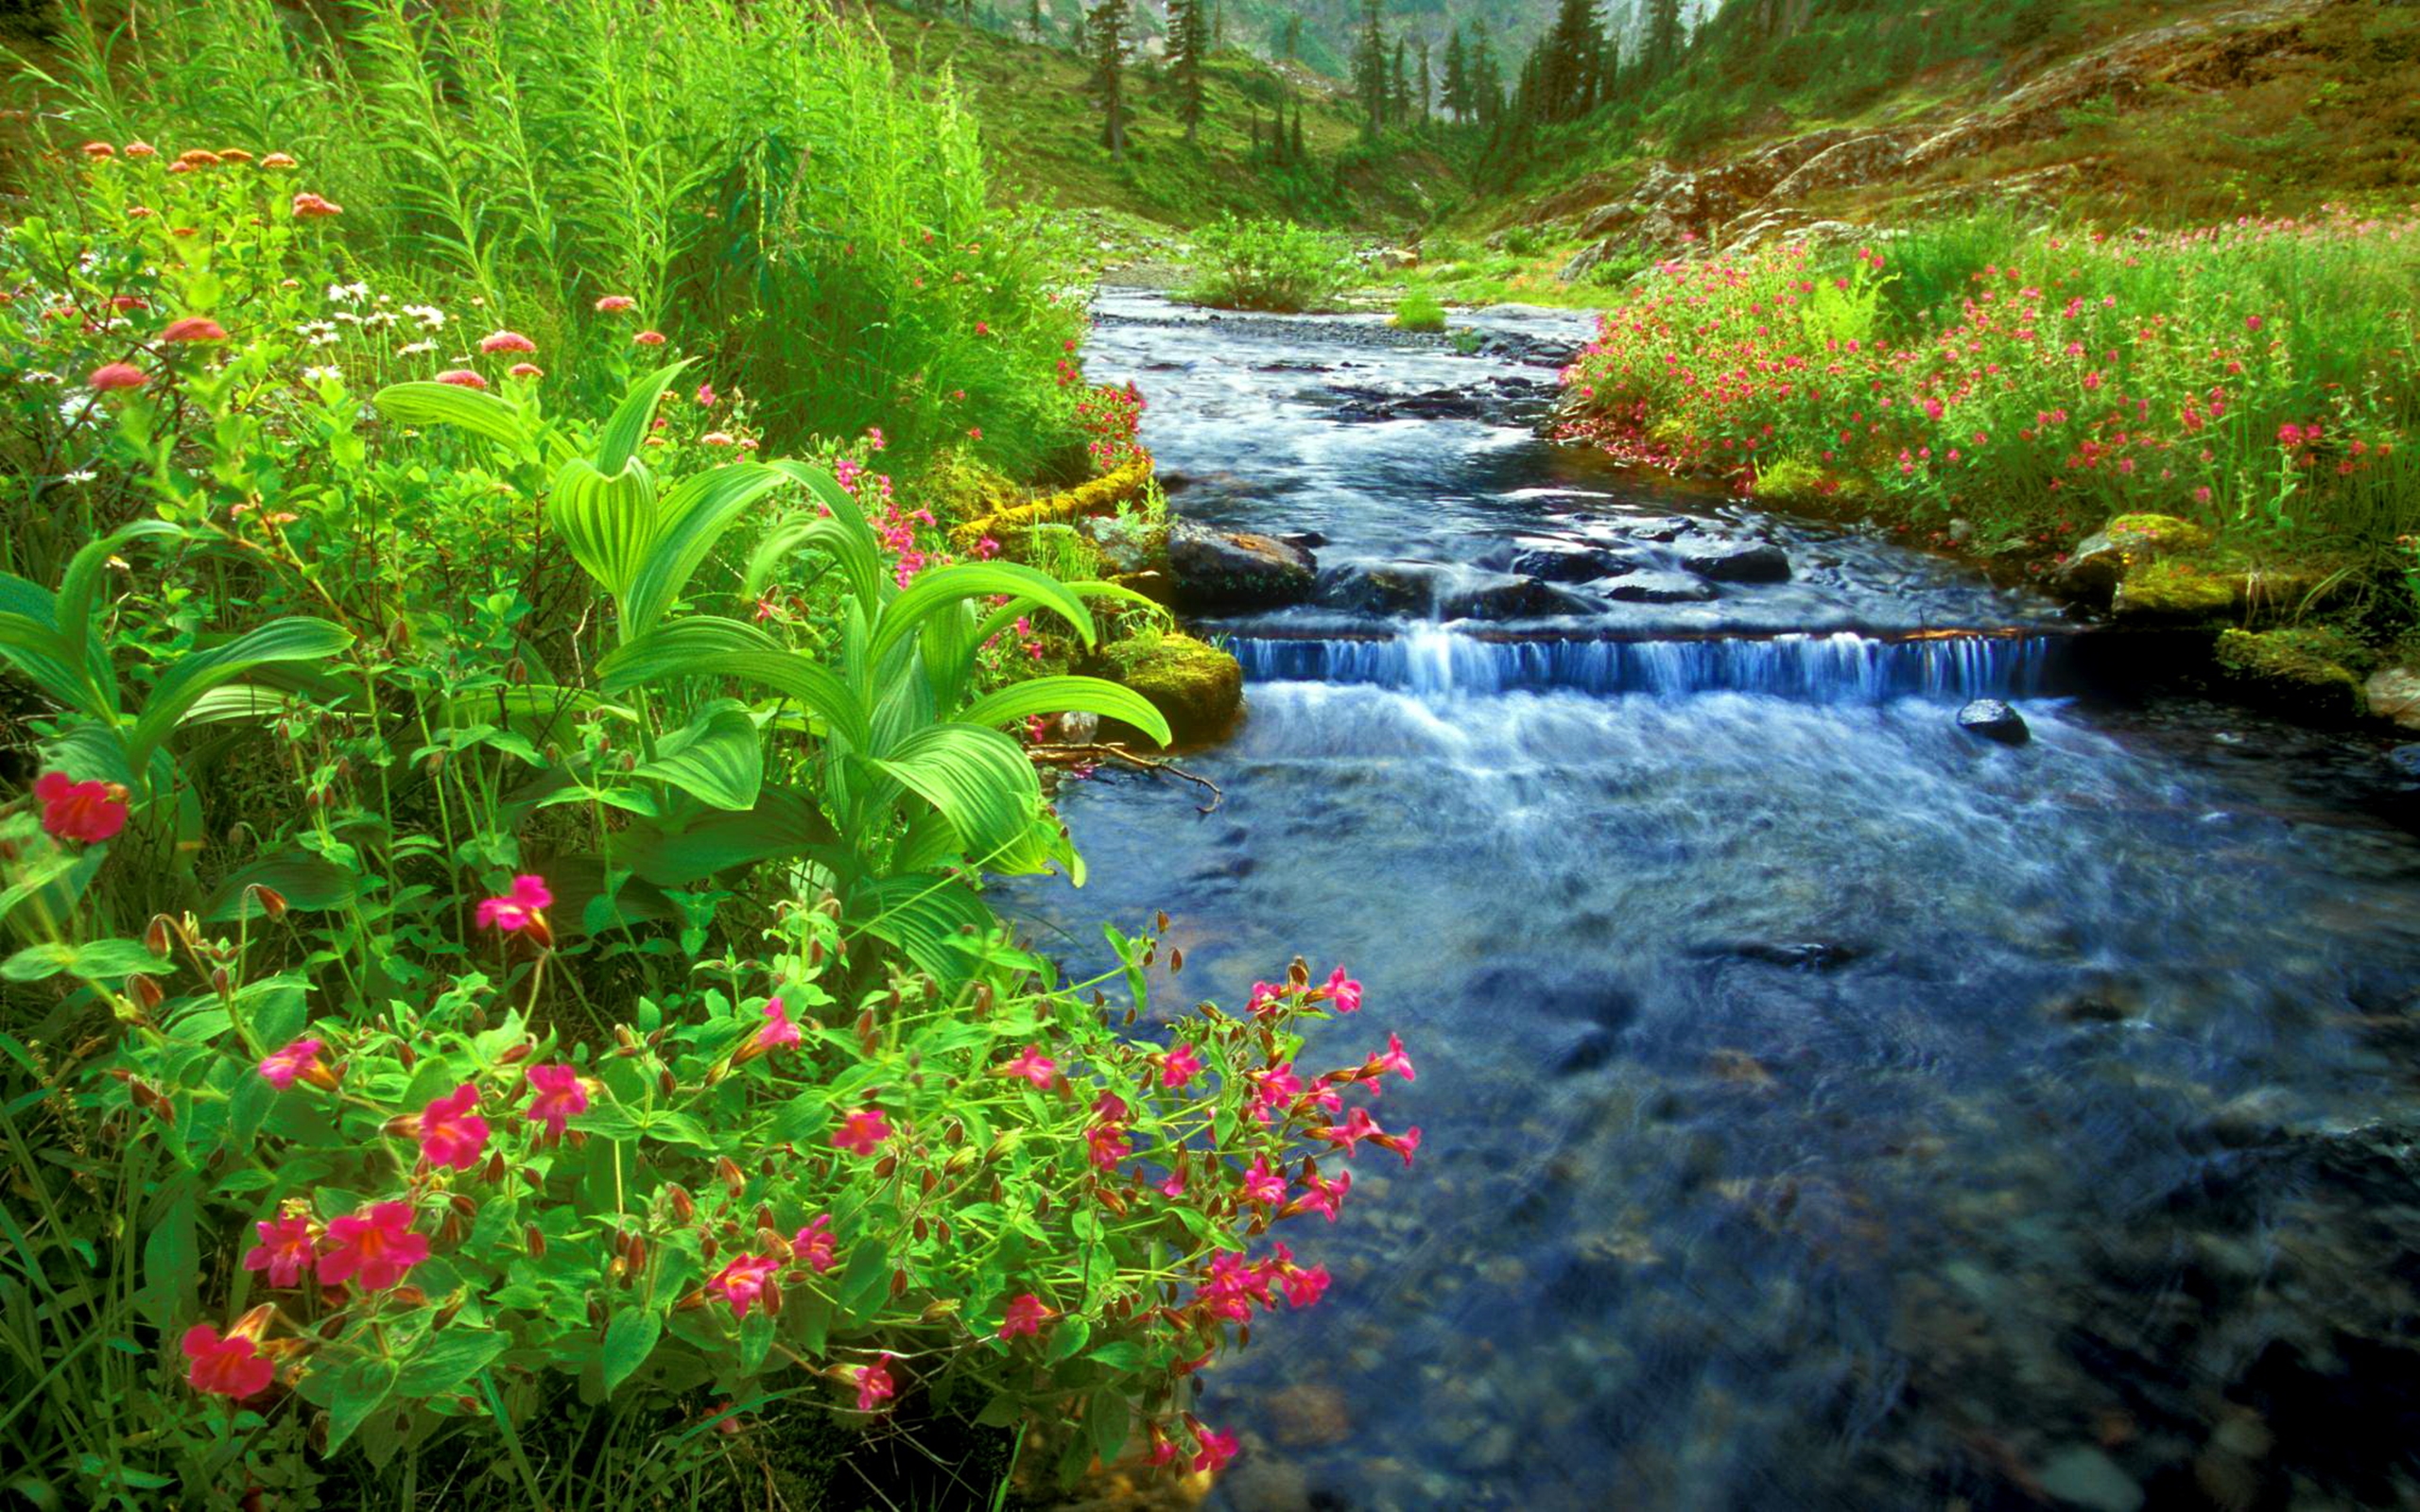 Crystal clear riverrockcoast with green trees bridgeDesktop Wallpaper HD  free download for windows  Wallpapers13com